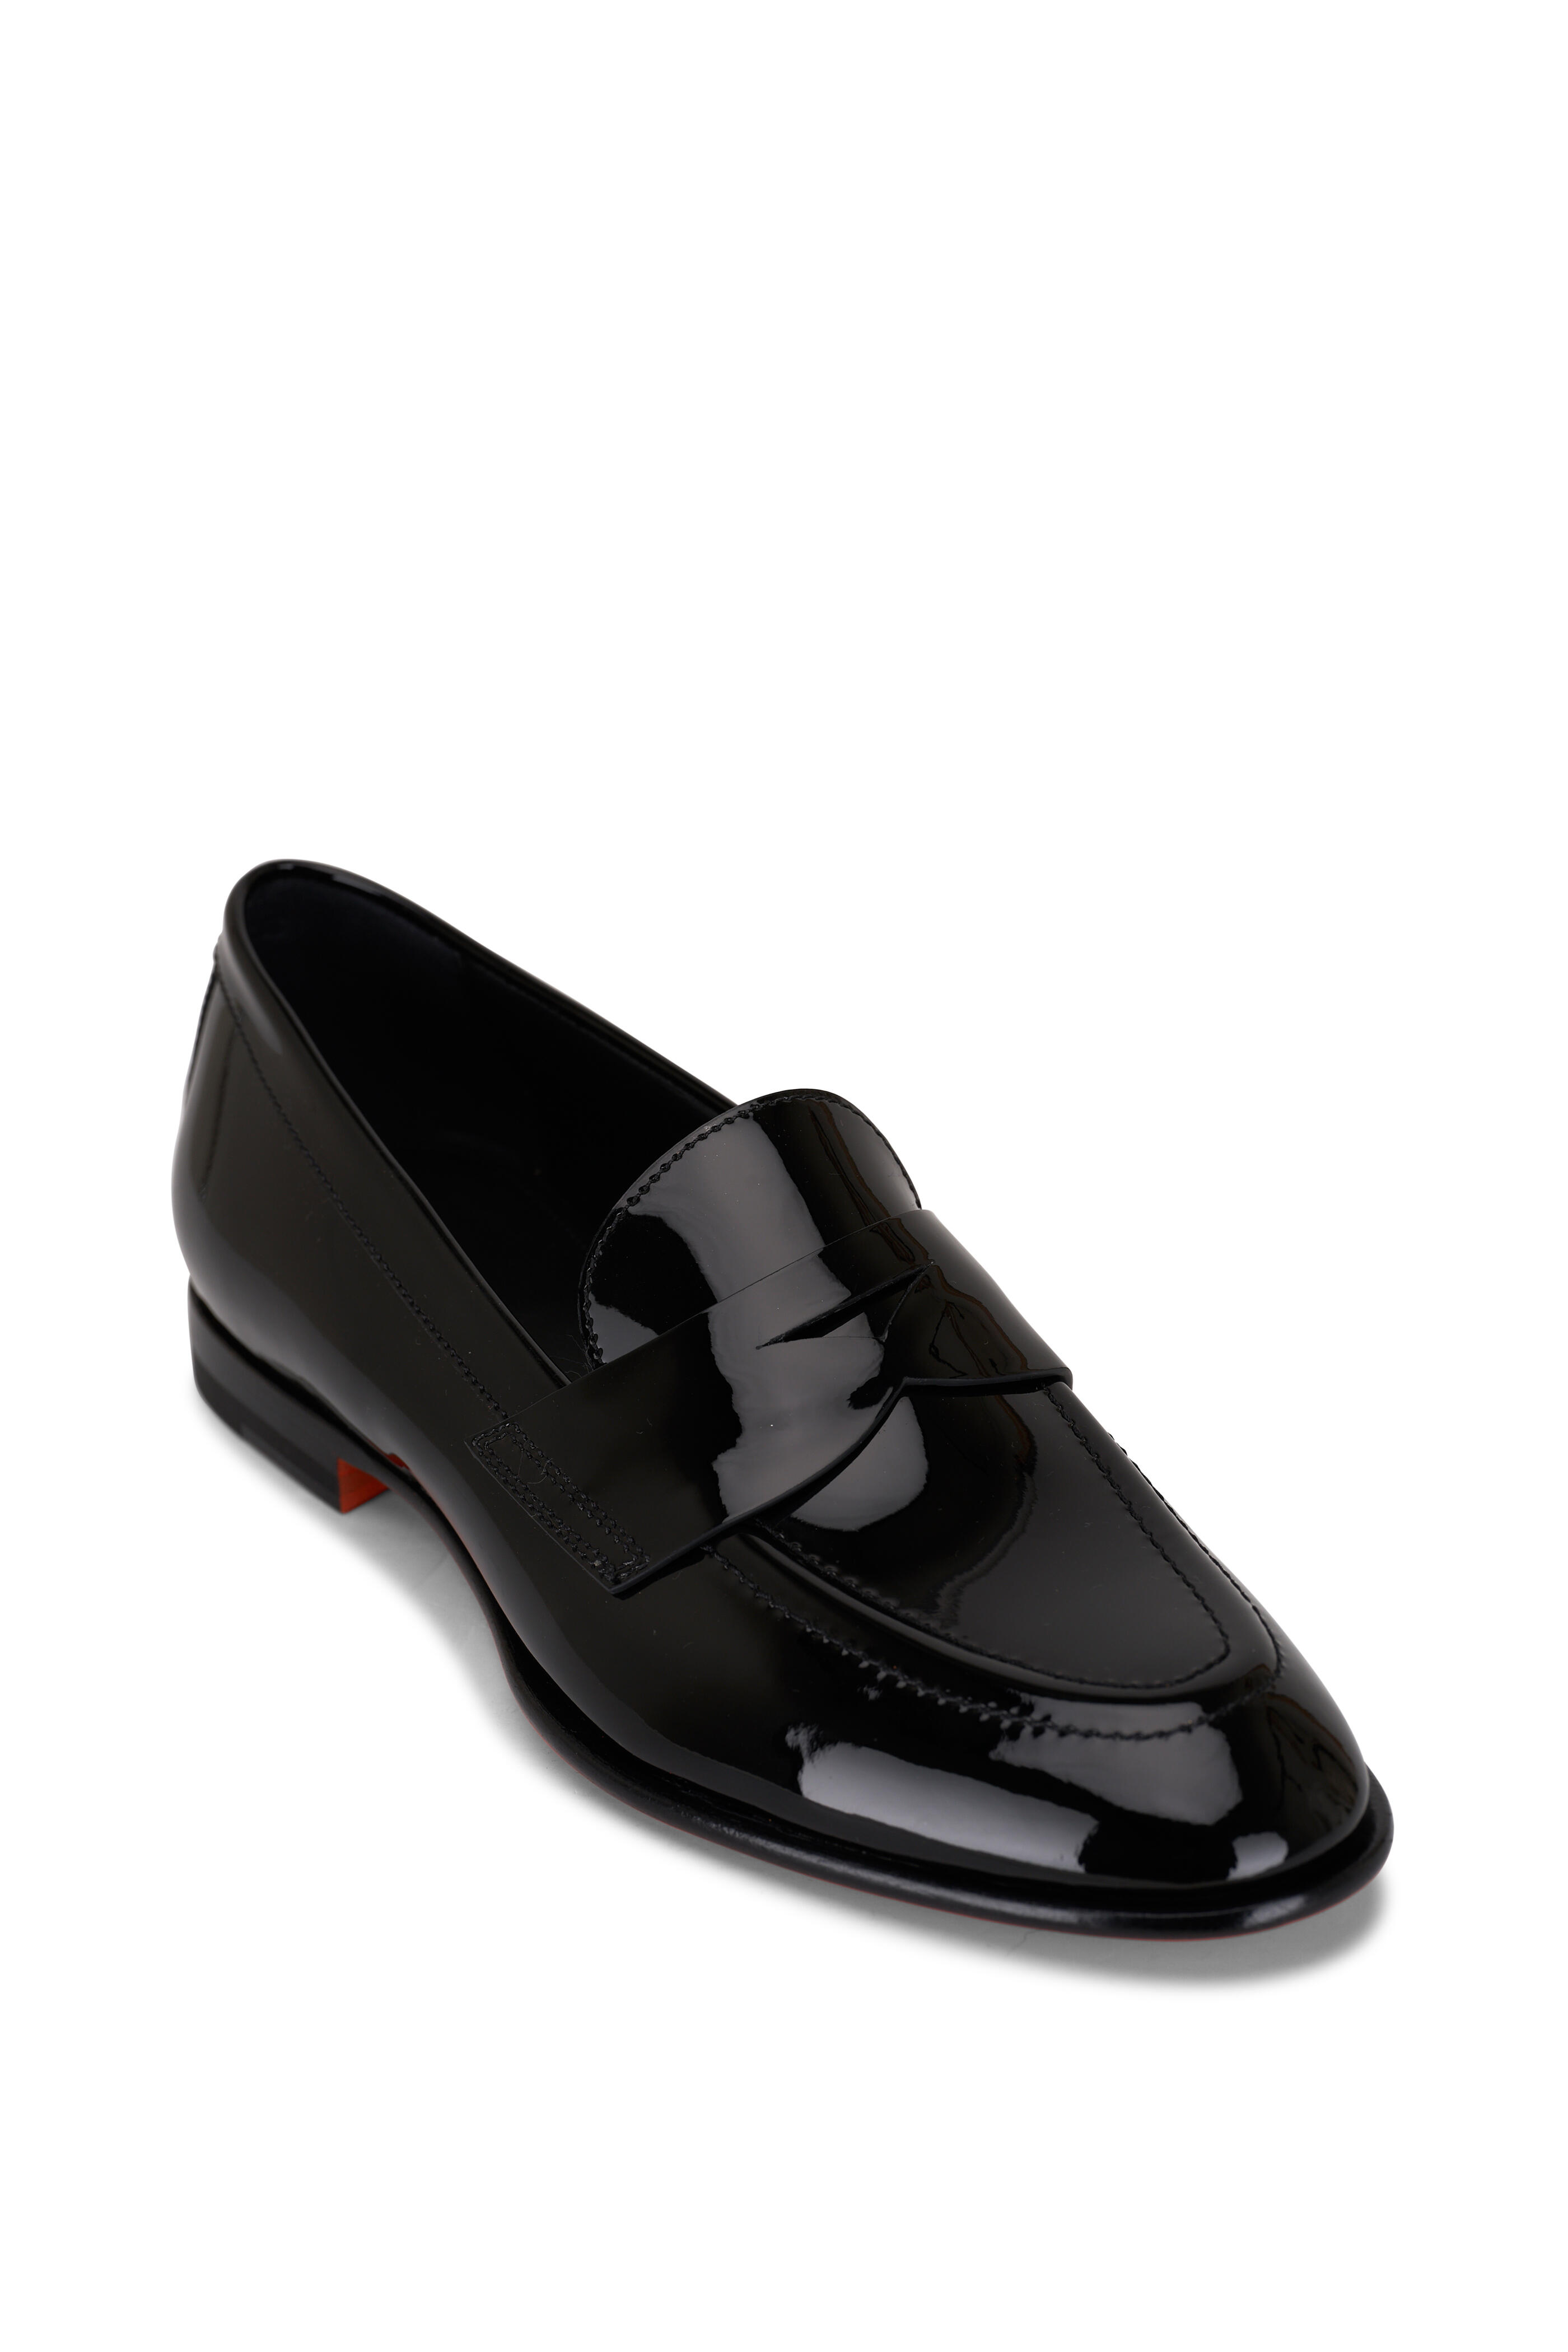 Santoni polished leather loafers - Black